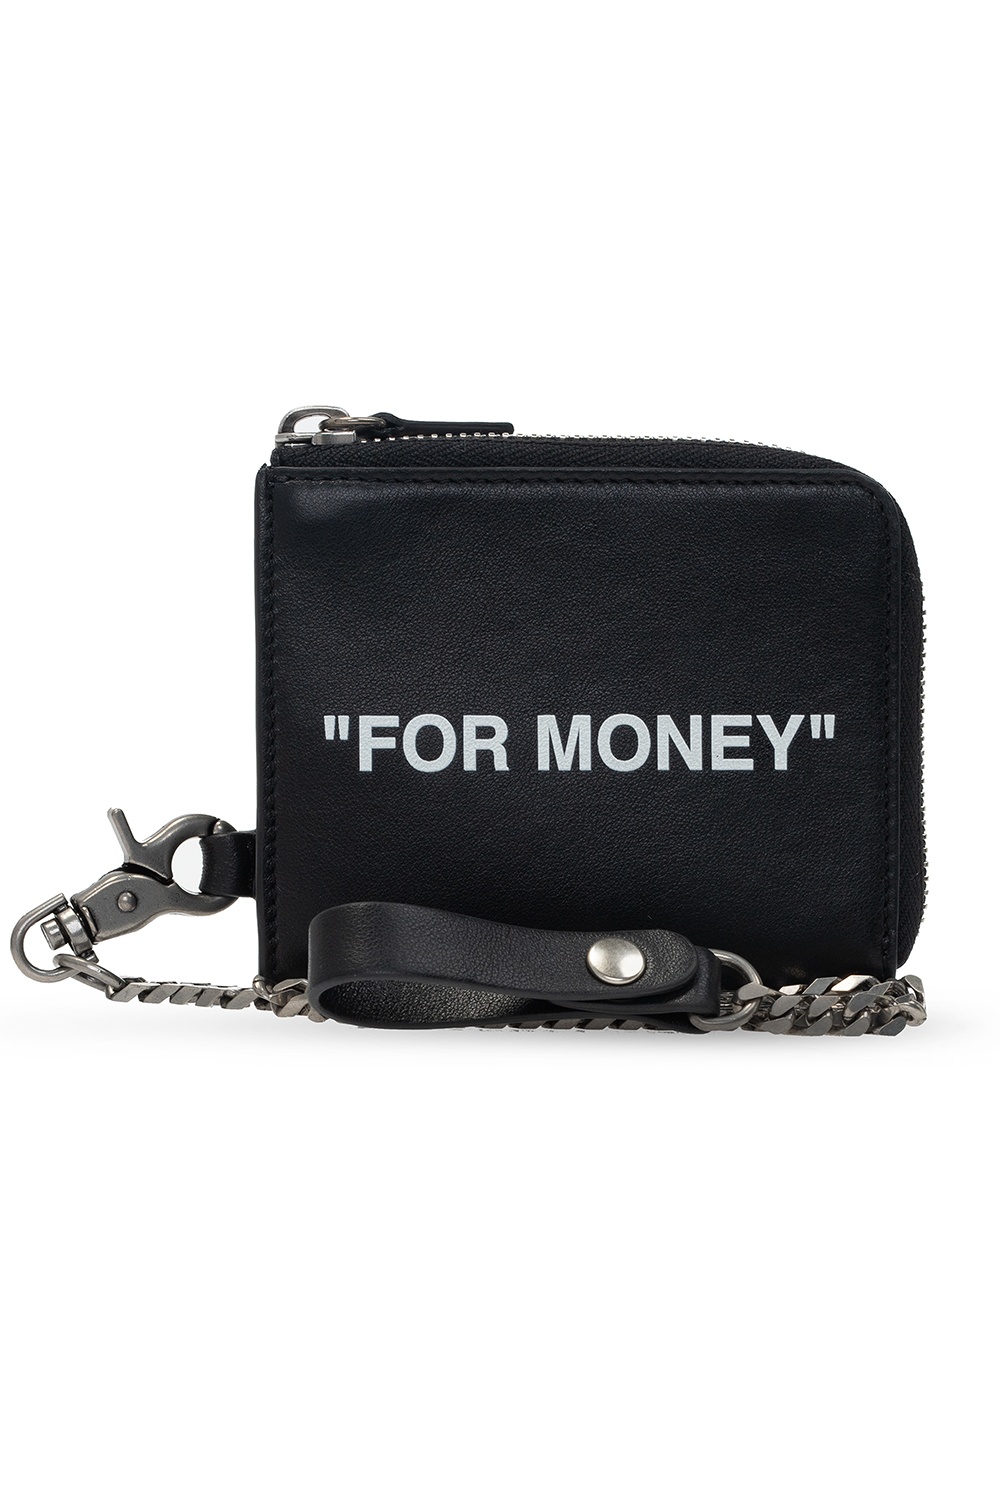 Off-White “For Money” Keychain Wallet 100% Genuine